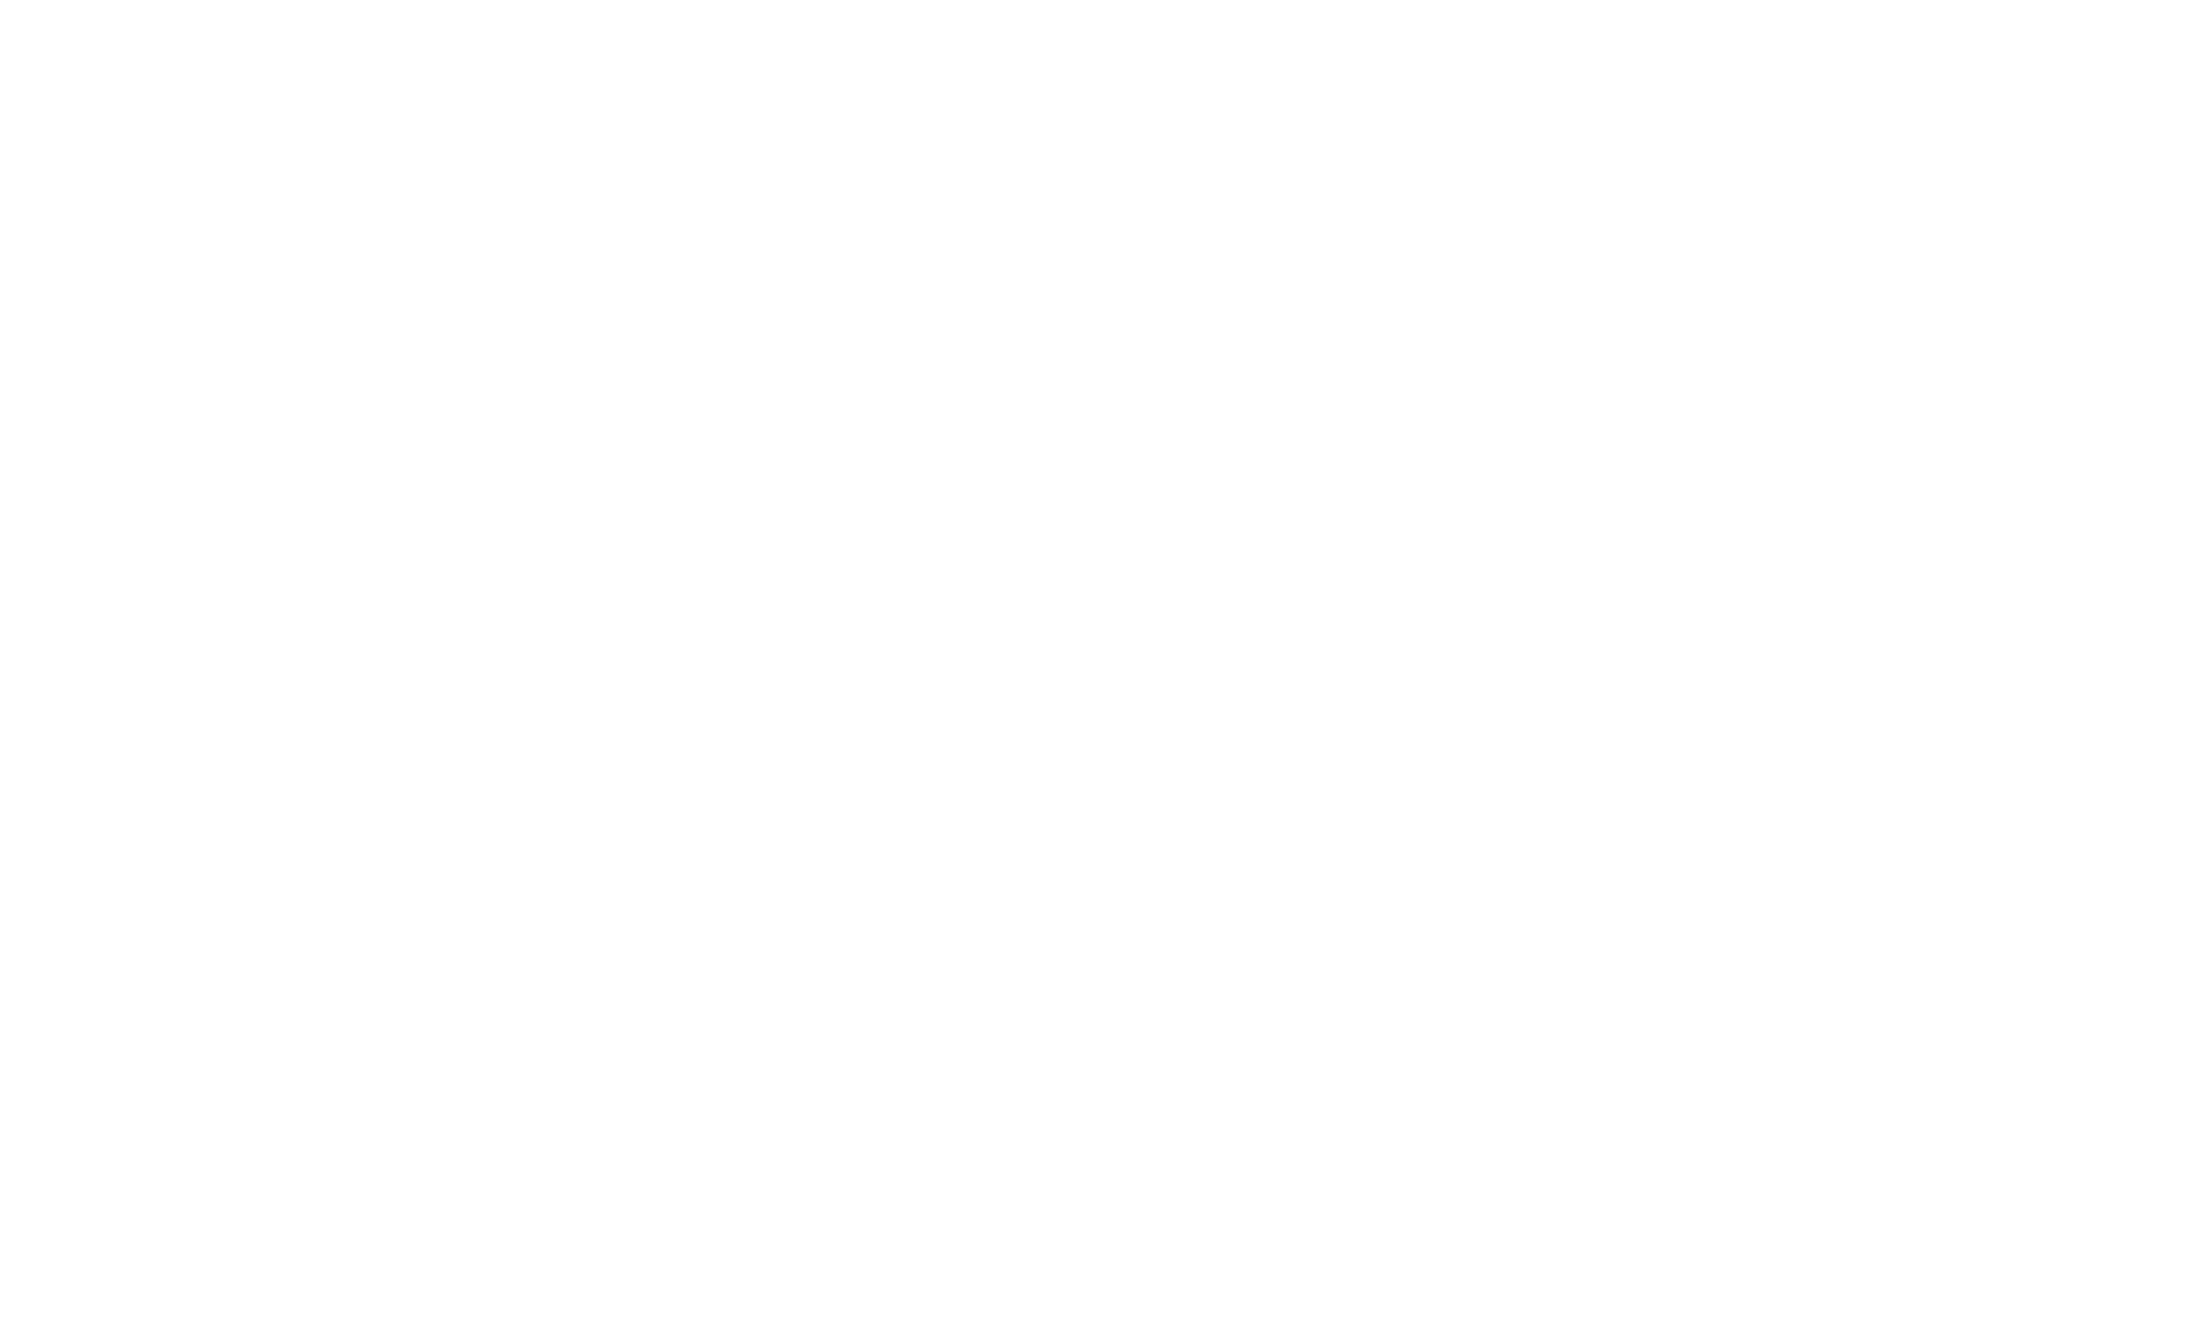 Fentimans Fearless logo